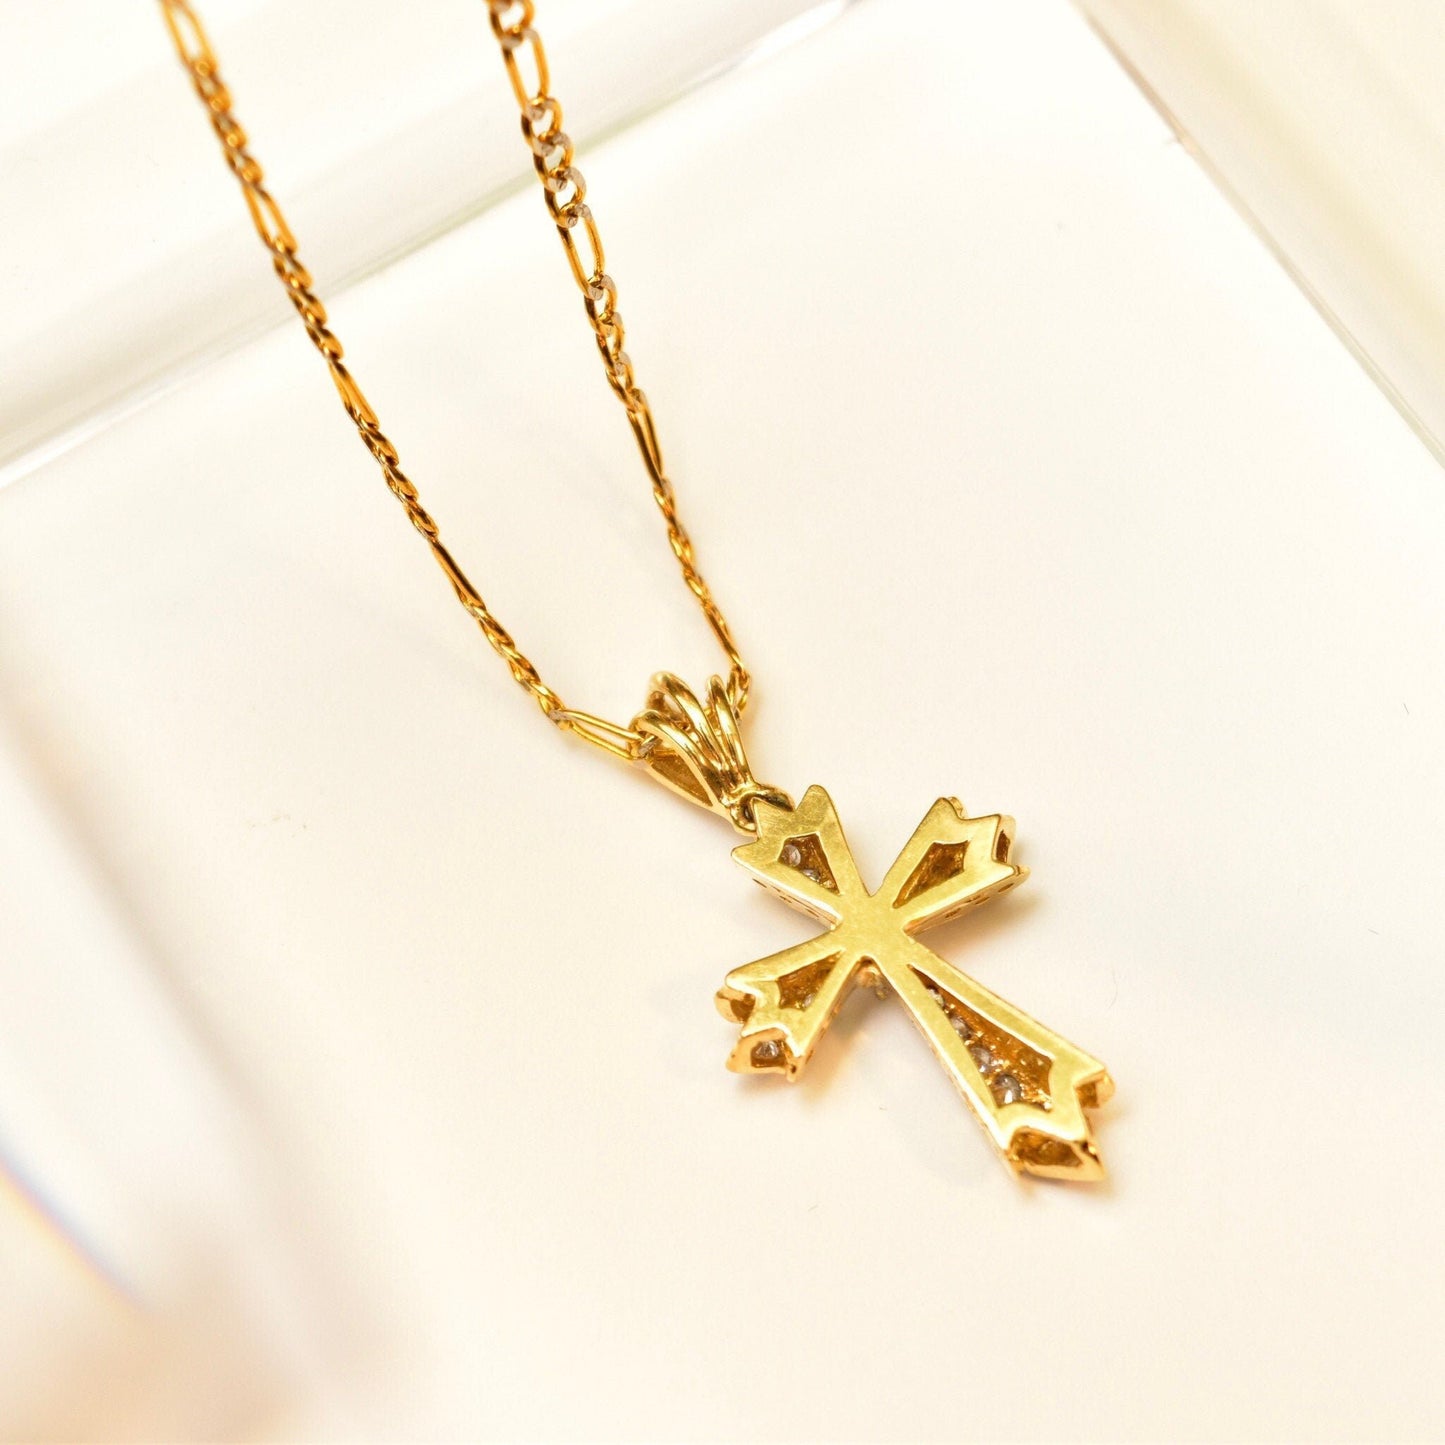 14K gold diamond pave gothic cross pendant necklace on two-tone diamond cut figaro chain, vintage religious jewelry